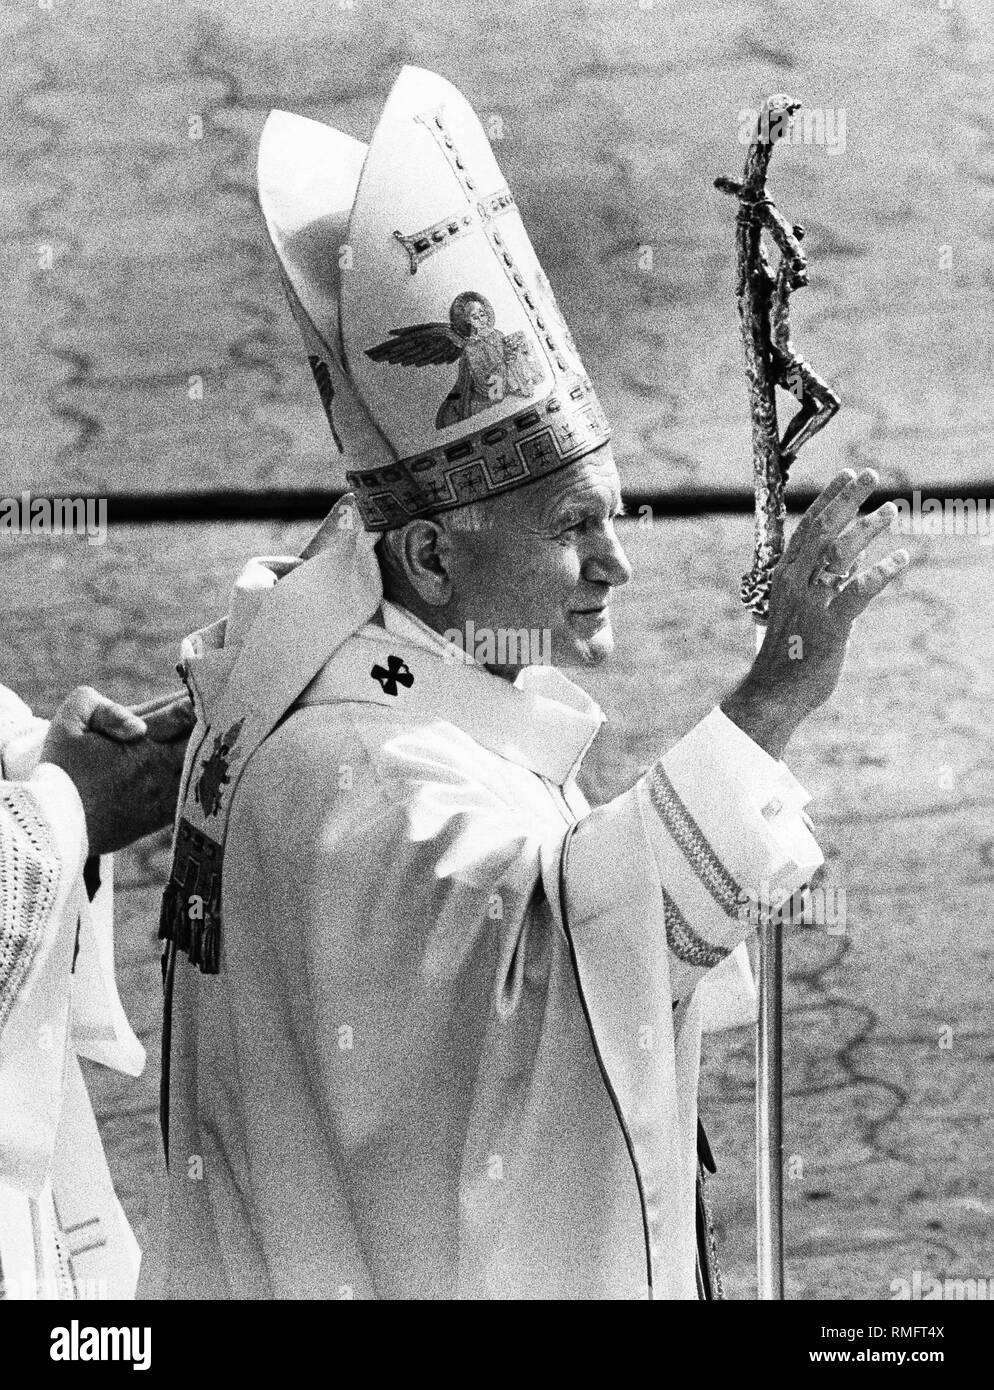 Pope John Paul II in full regalia. Stock Photo